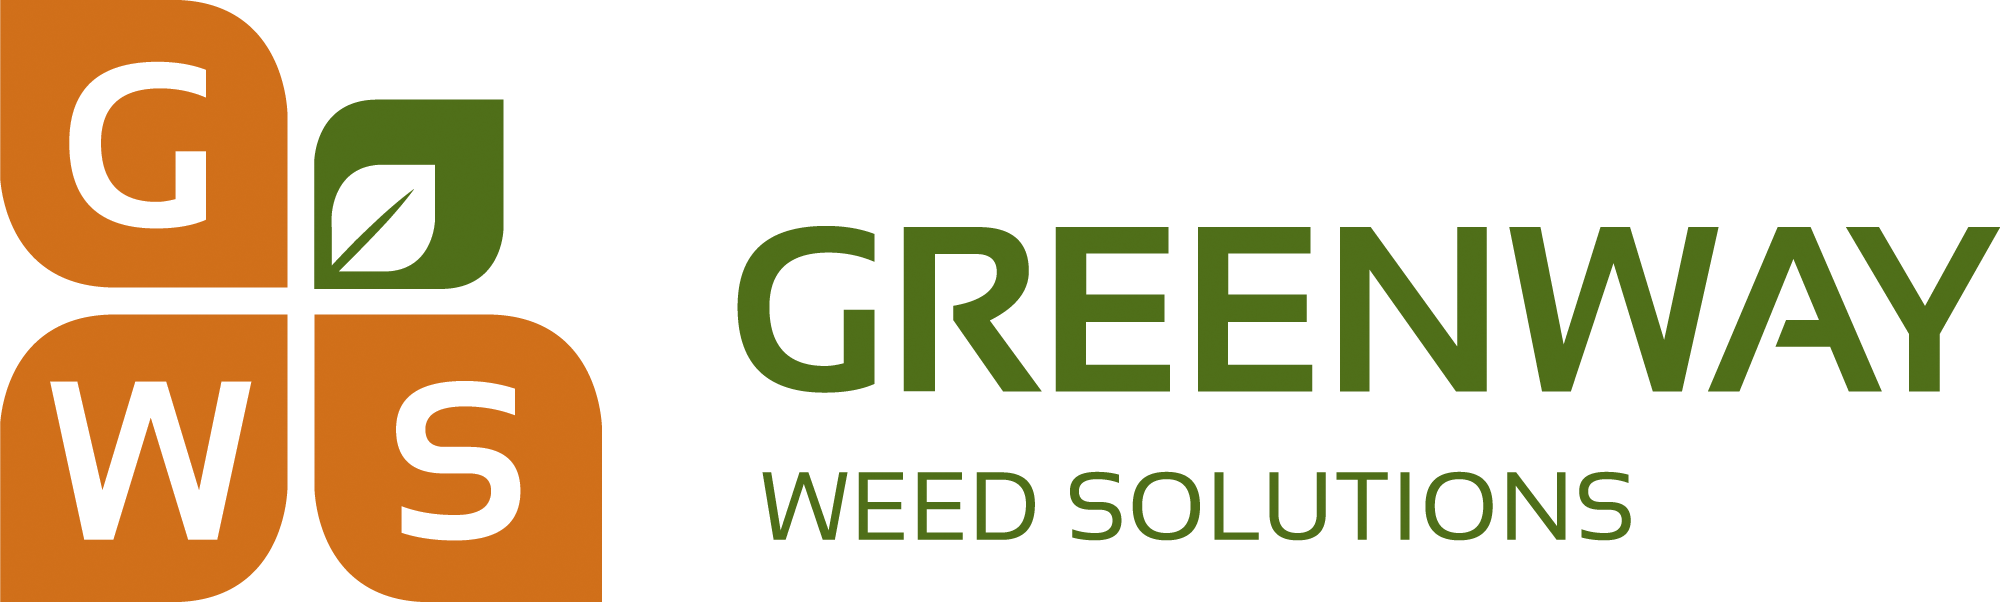 Greenway_Weed_Solutions_logo_GWS